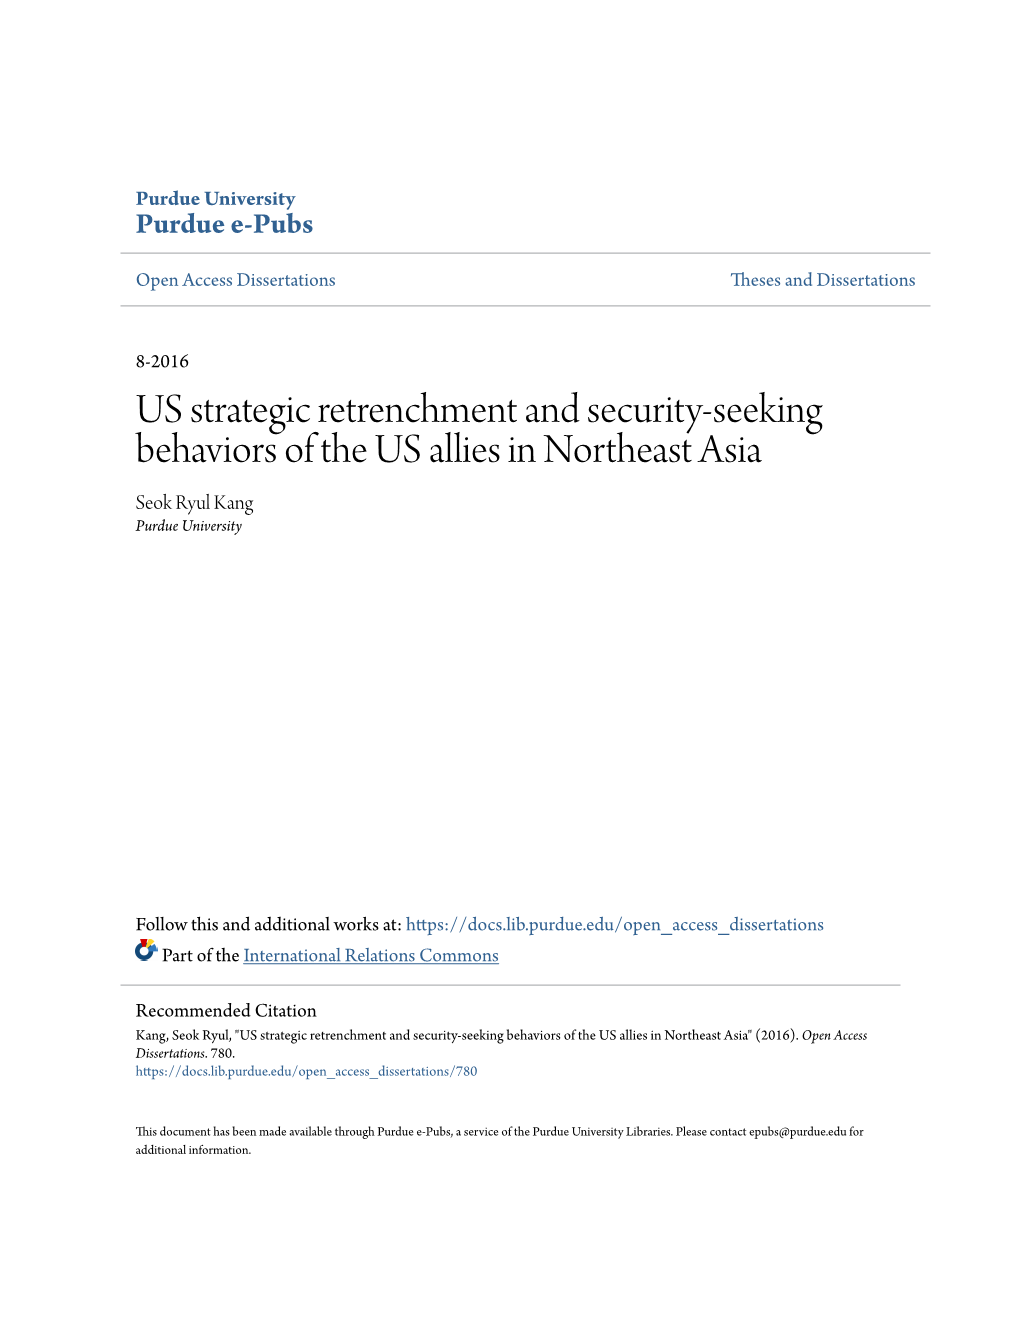 US Strategic Retrenchment and Security-Seeking Behaviors of the US Allies in Northeast Asia Seok Ryul Kang Purdue University